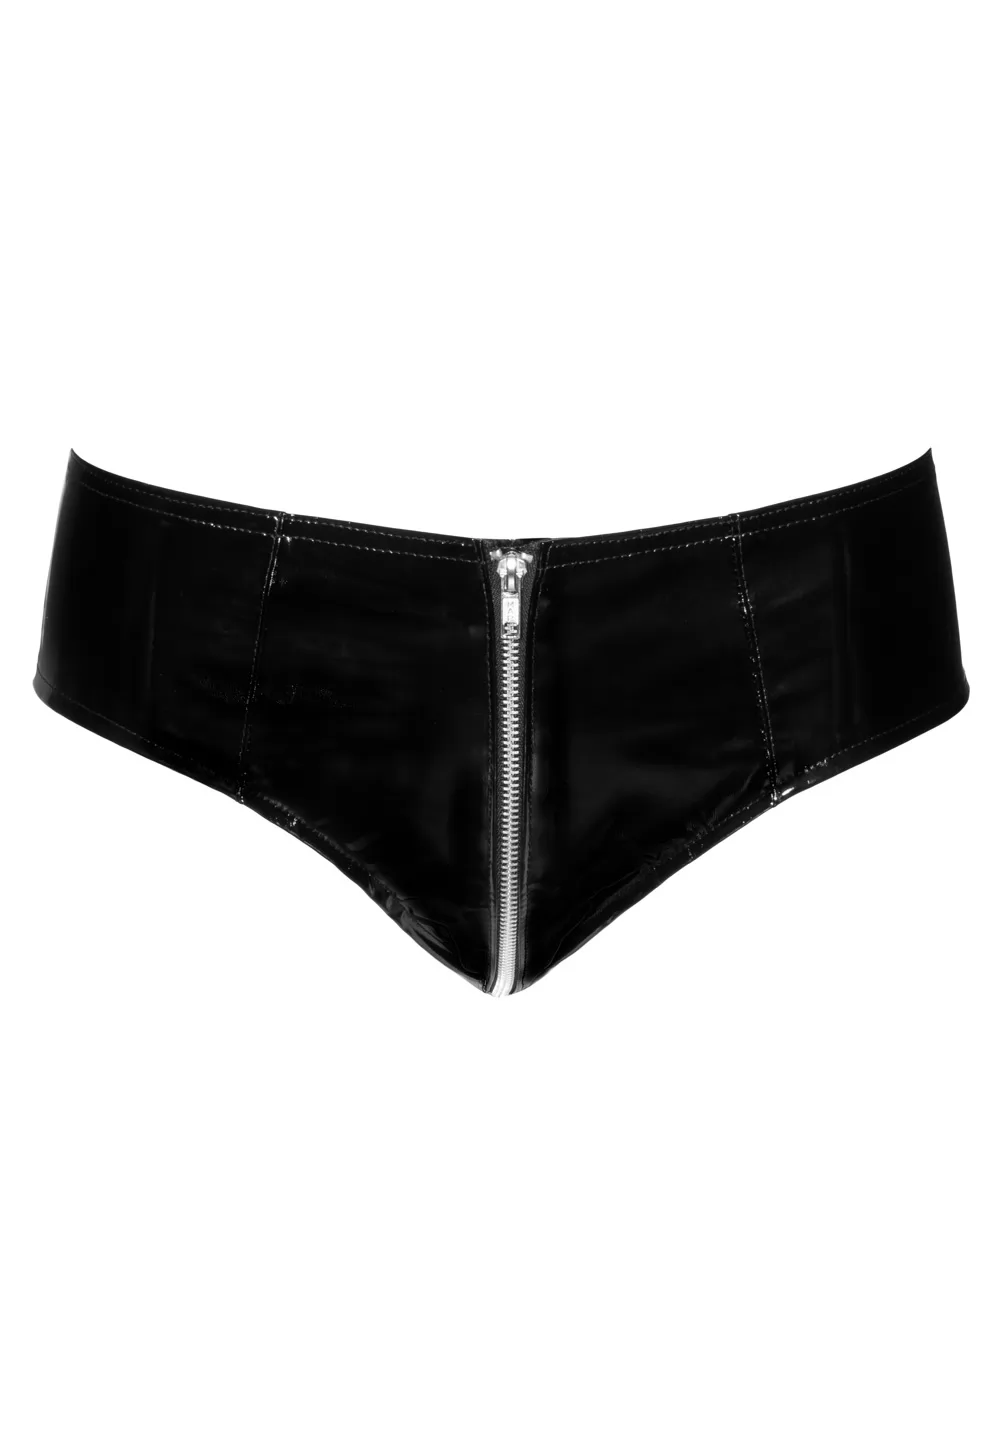 Fully zipped panty in shiny black vinyl